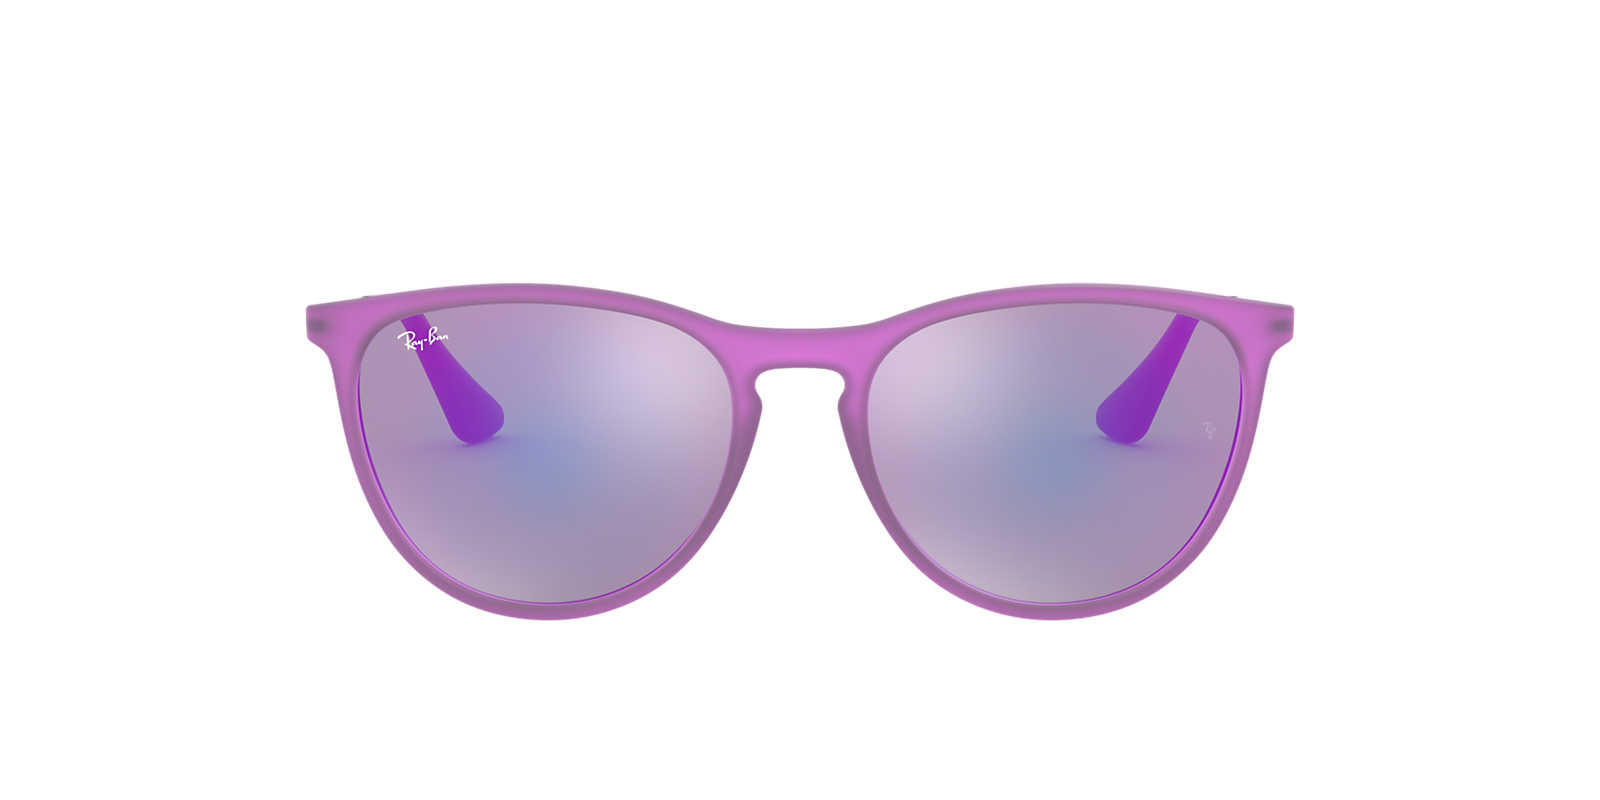 2019 cheap ray ban sunglasses ebay free shiping